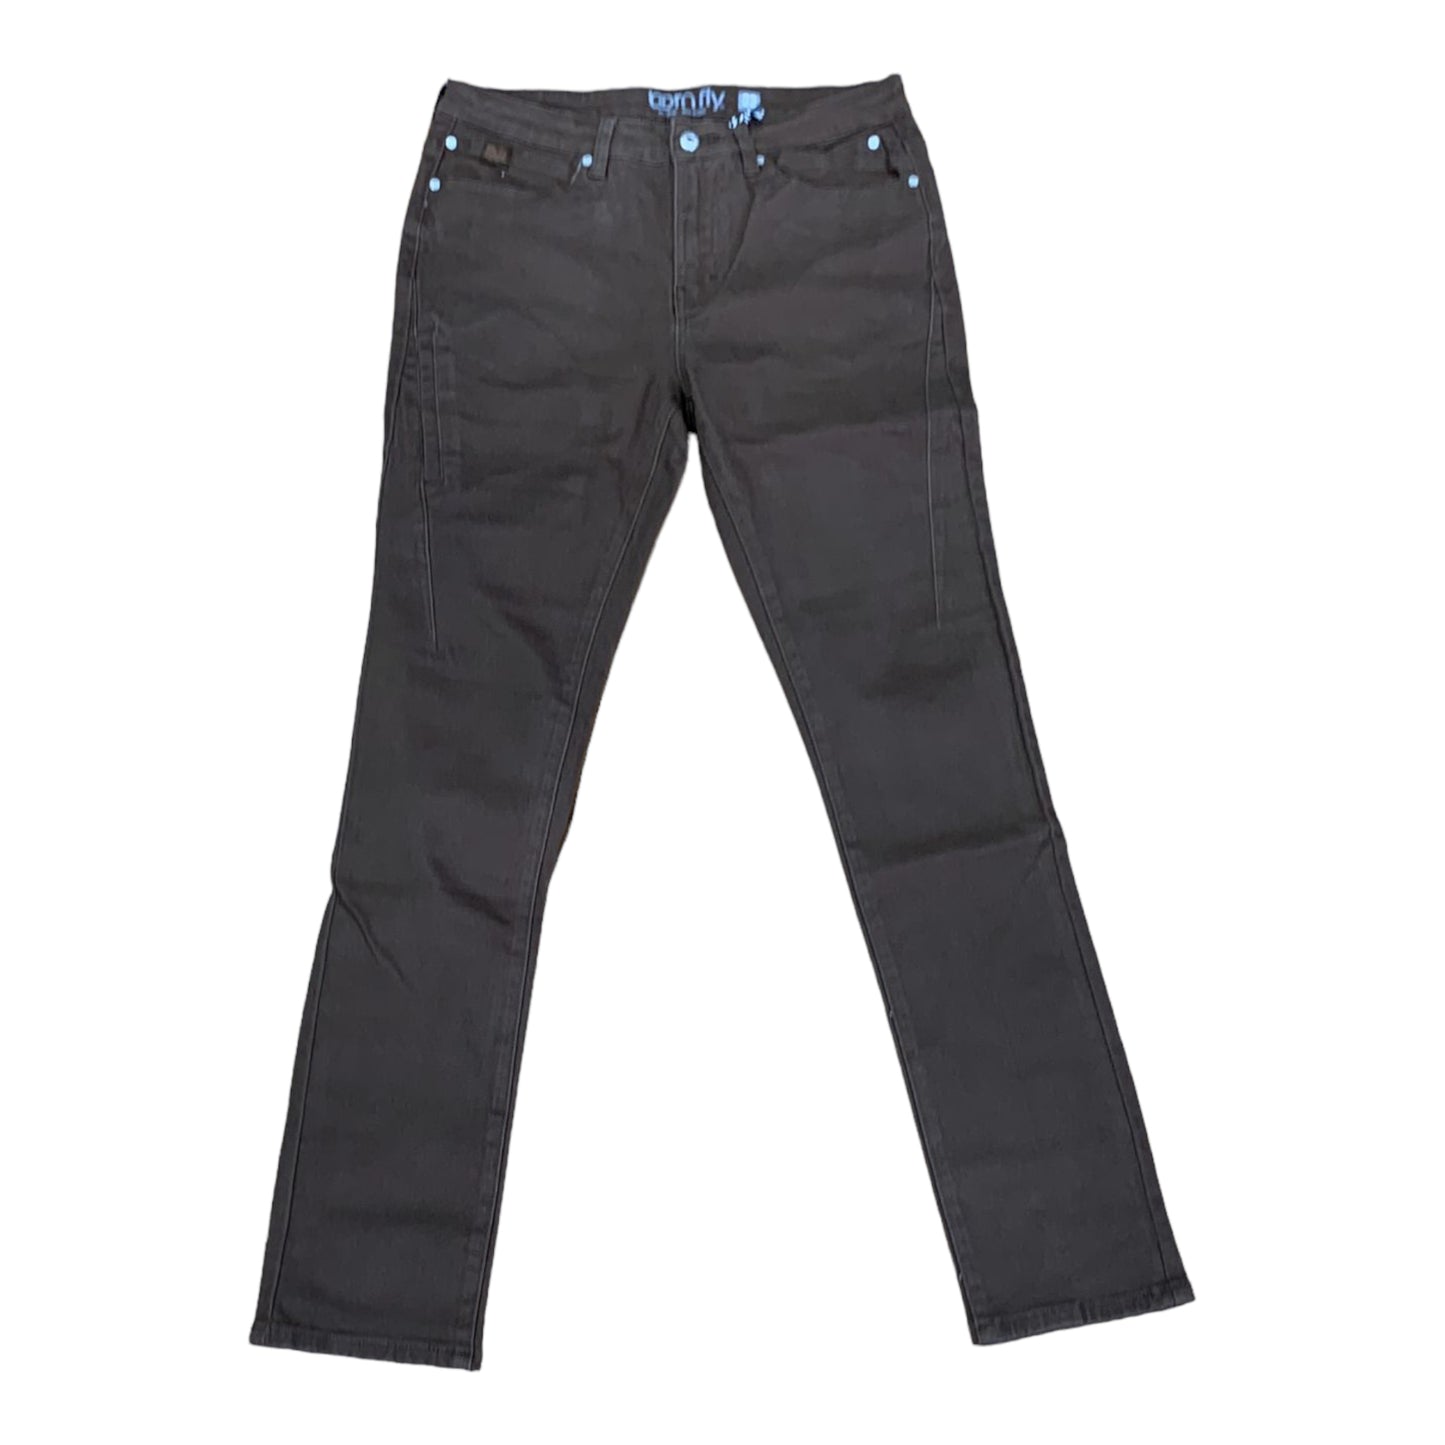 BORN FLY: Yarn Dyed Jeans 2308D4842